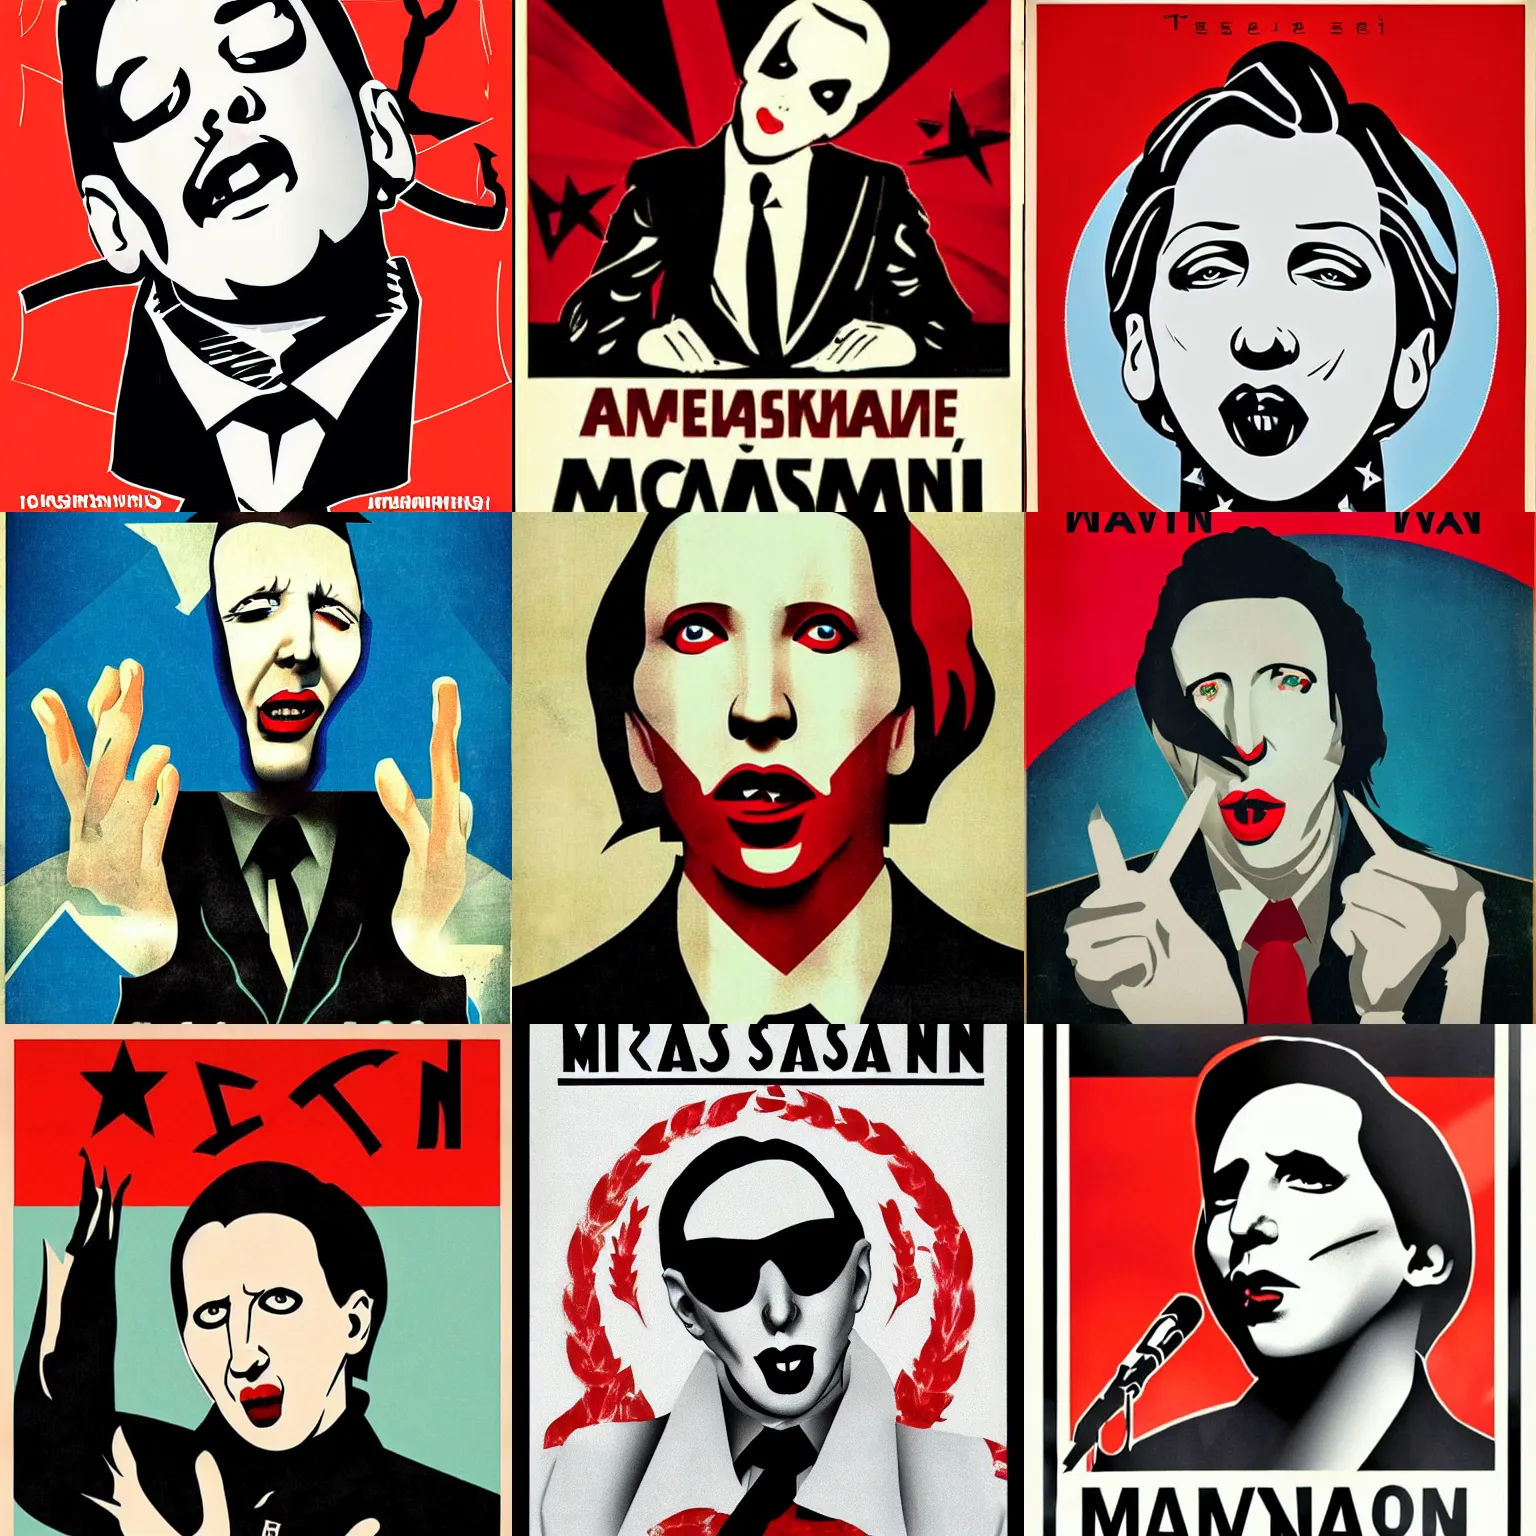 Prompt: Marilyn Manson, soviet style propaganda poster